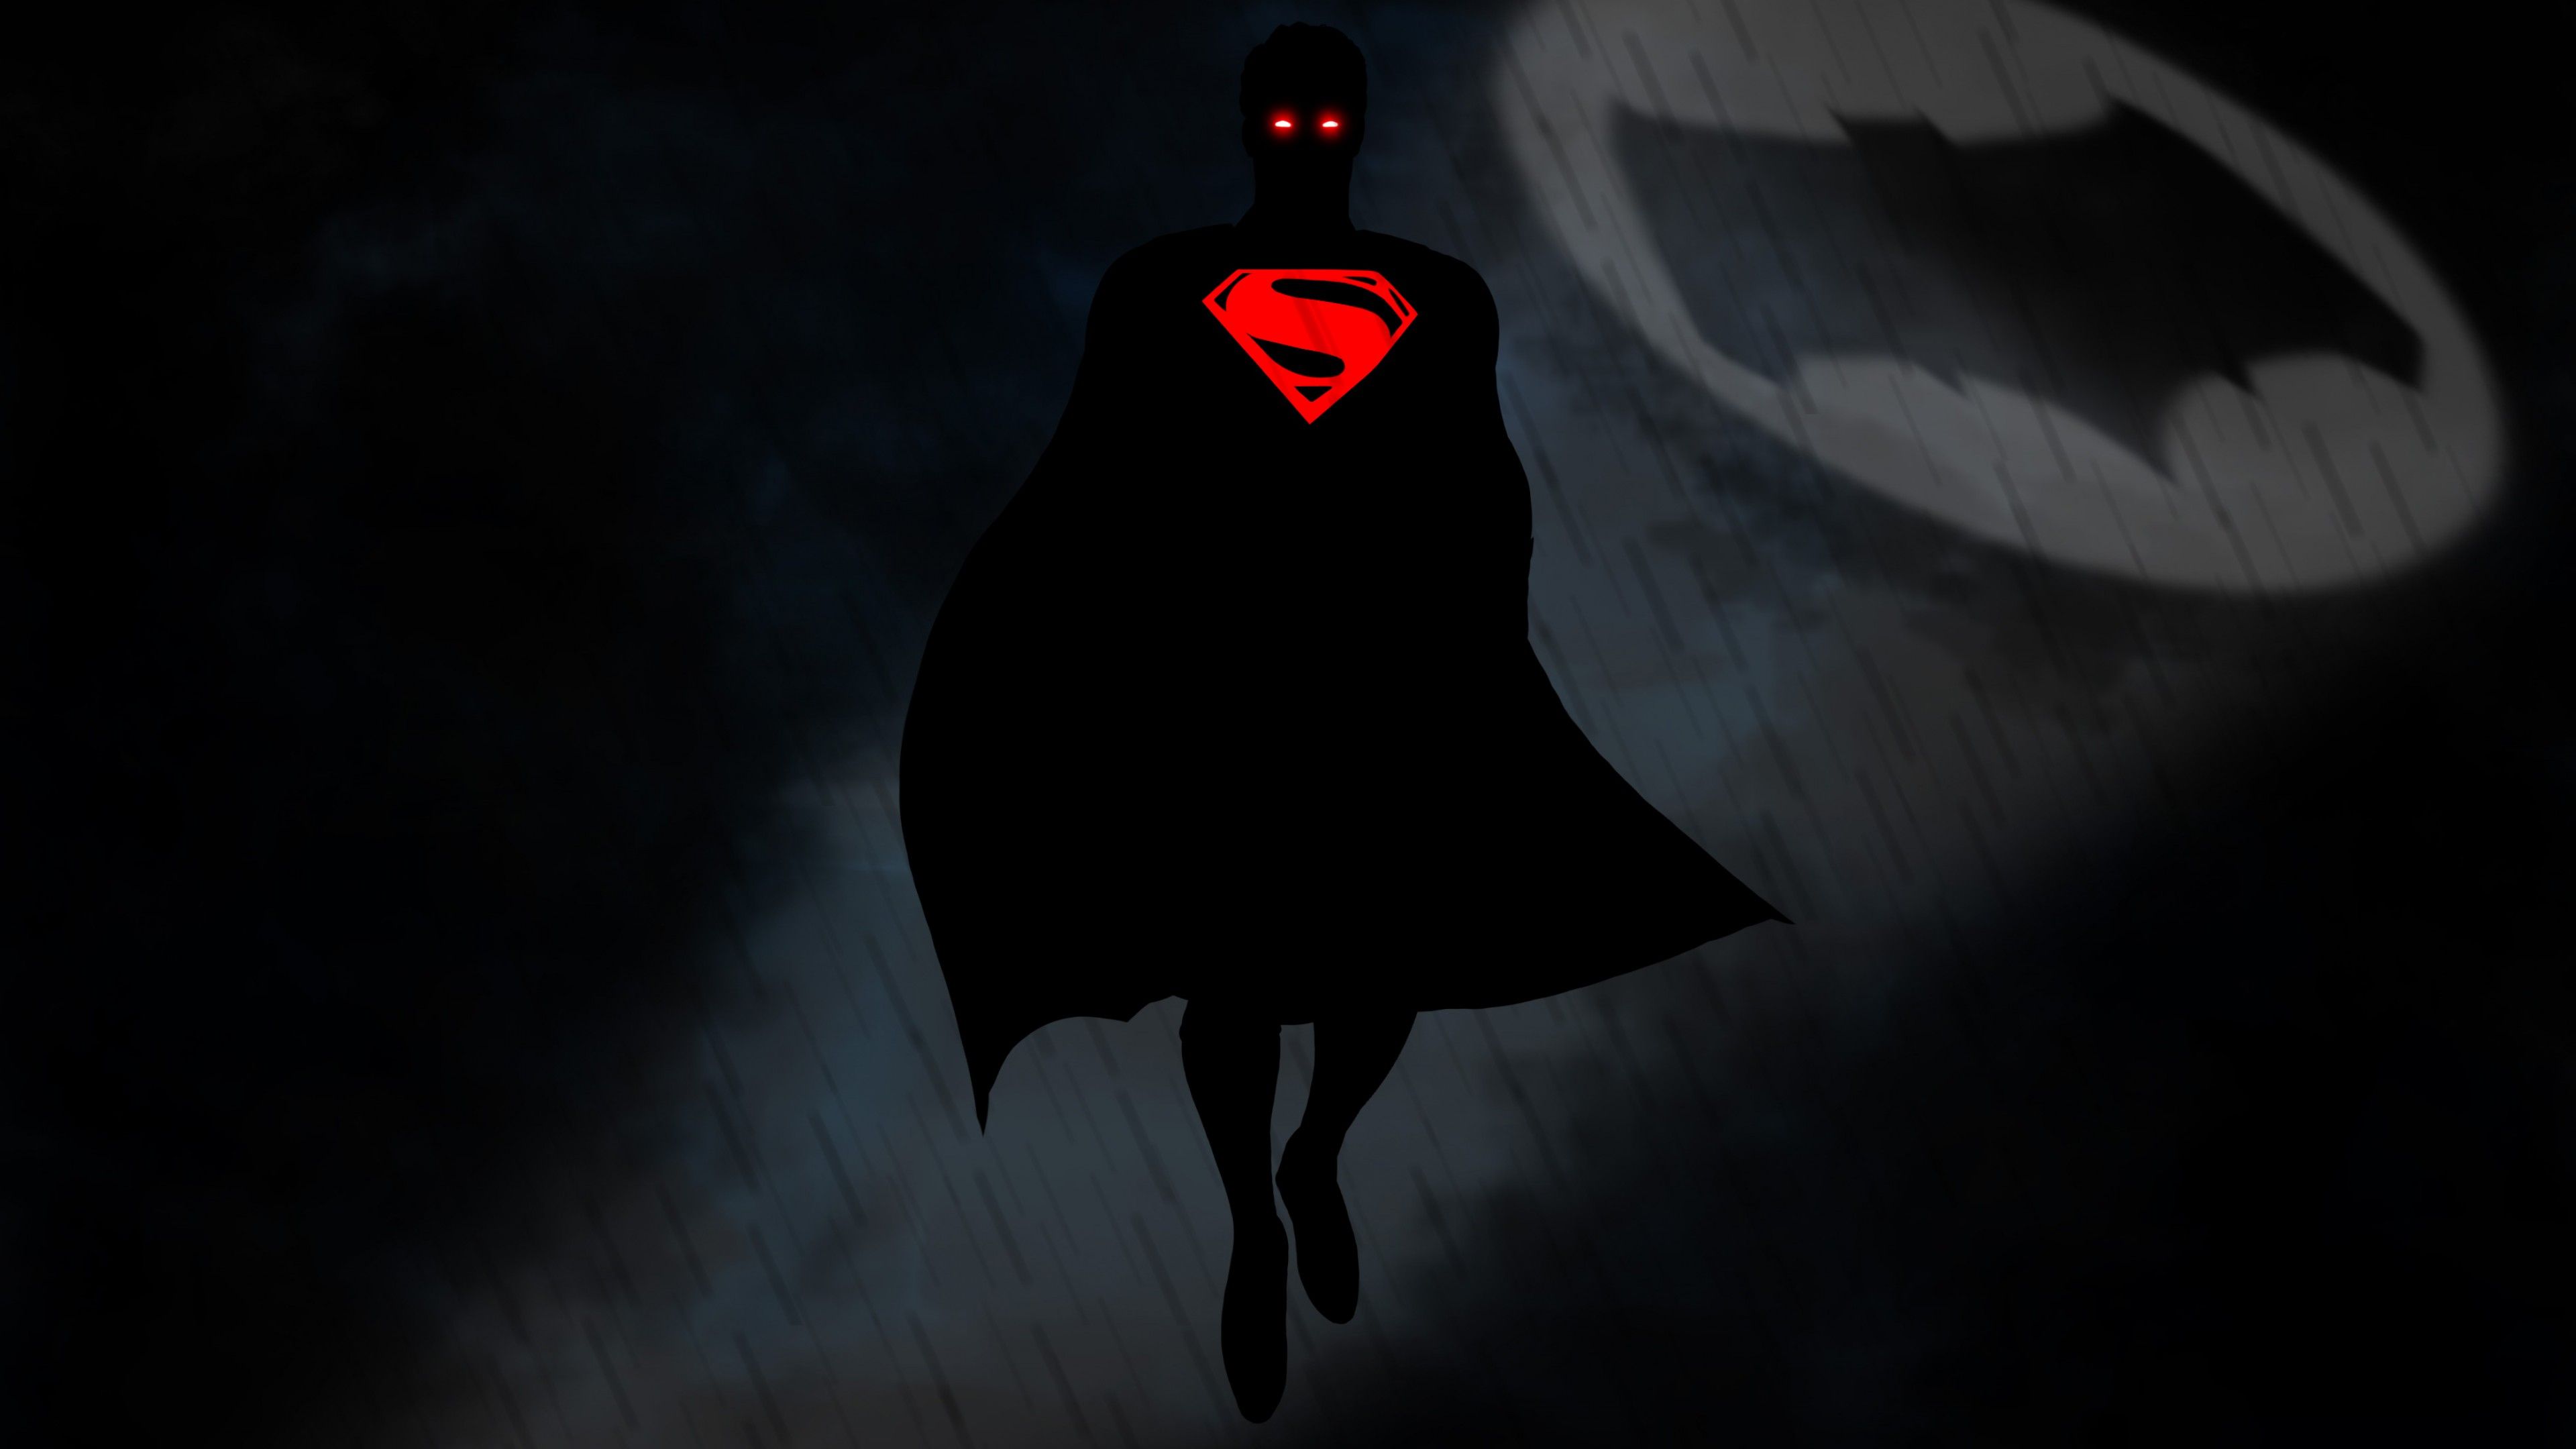 Wallpaper Superman, Bat Signal, Black, 4K, Black Dark,. Wallpaper For IPhone, Android, Mobile And Desktop